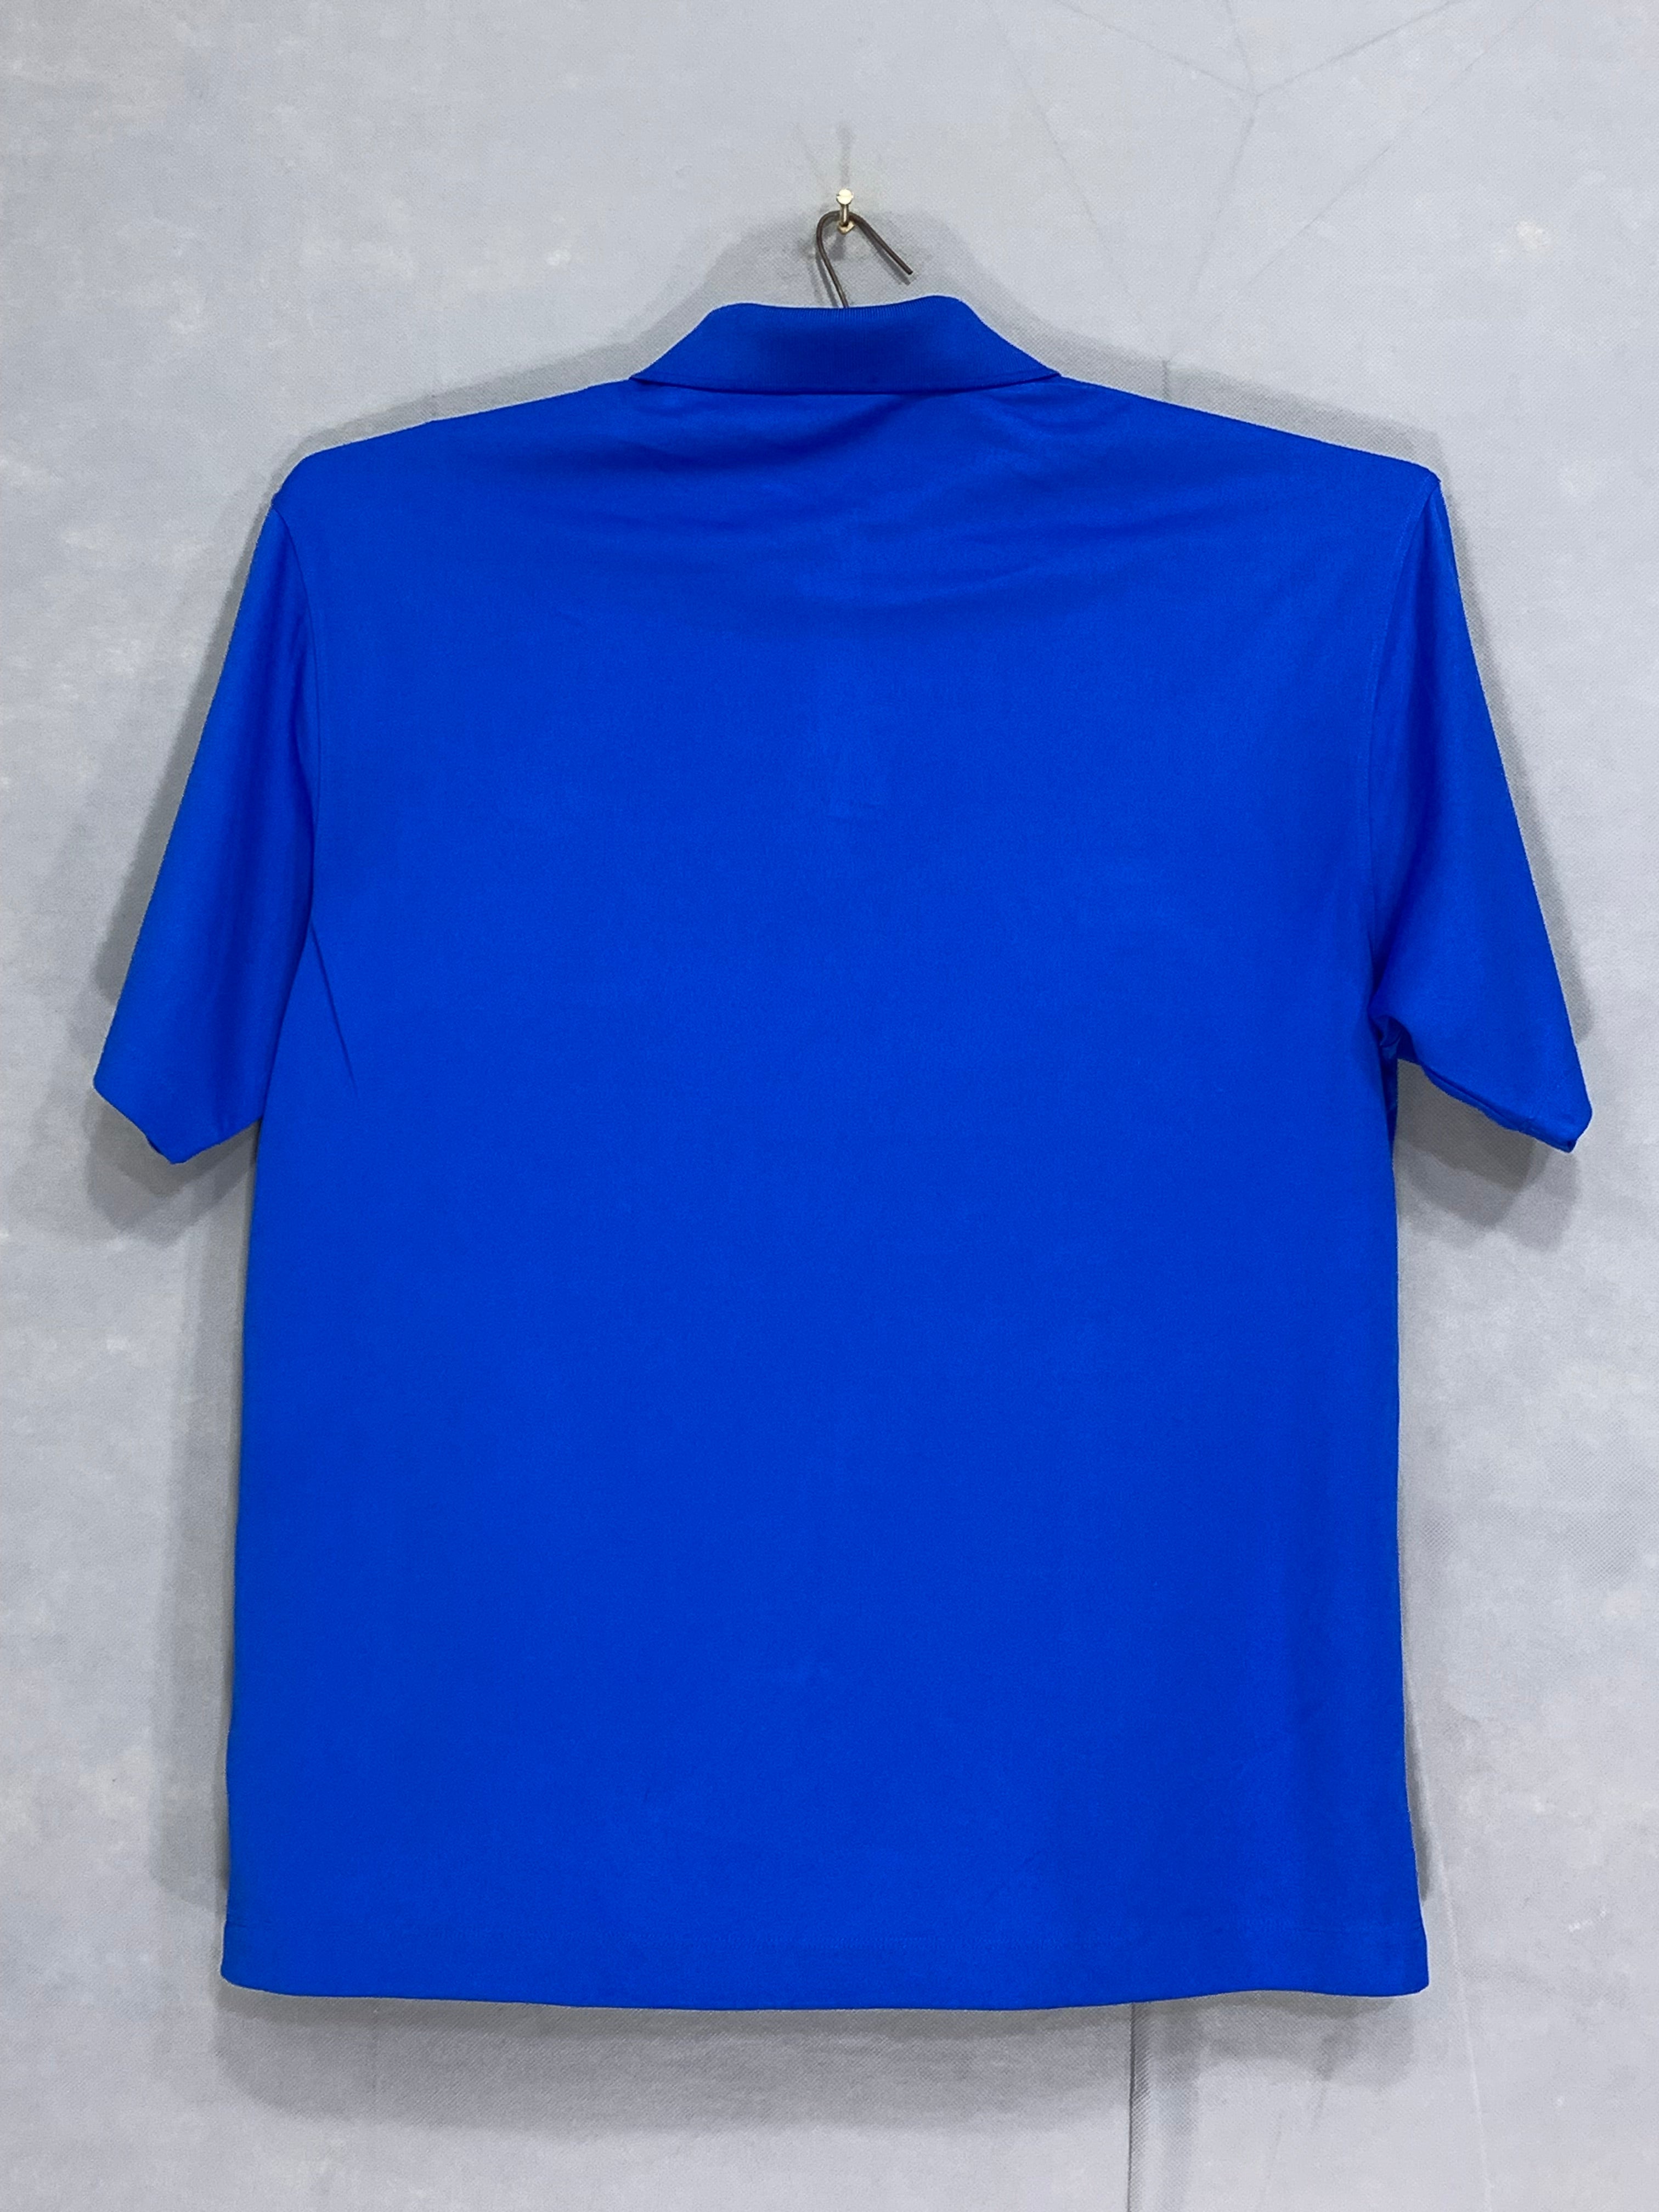 Nike Dir Fit Branded Original For Sports Golf Polo Men T Shirt